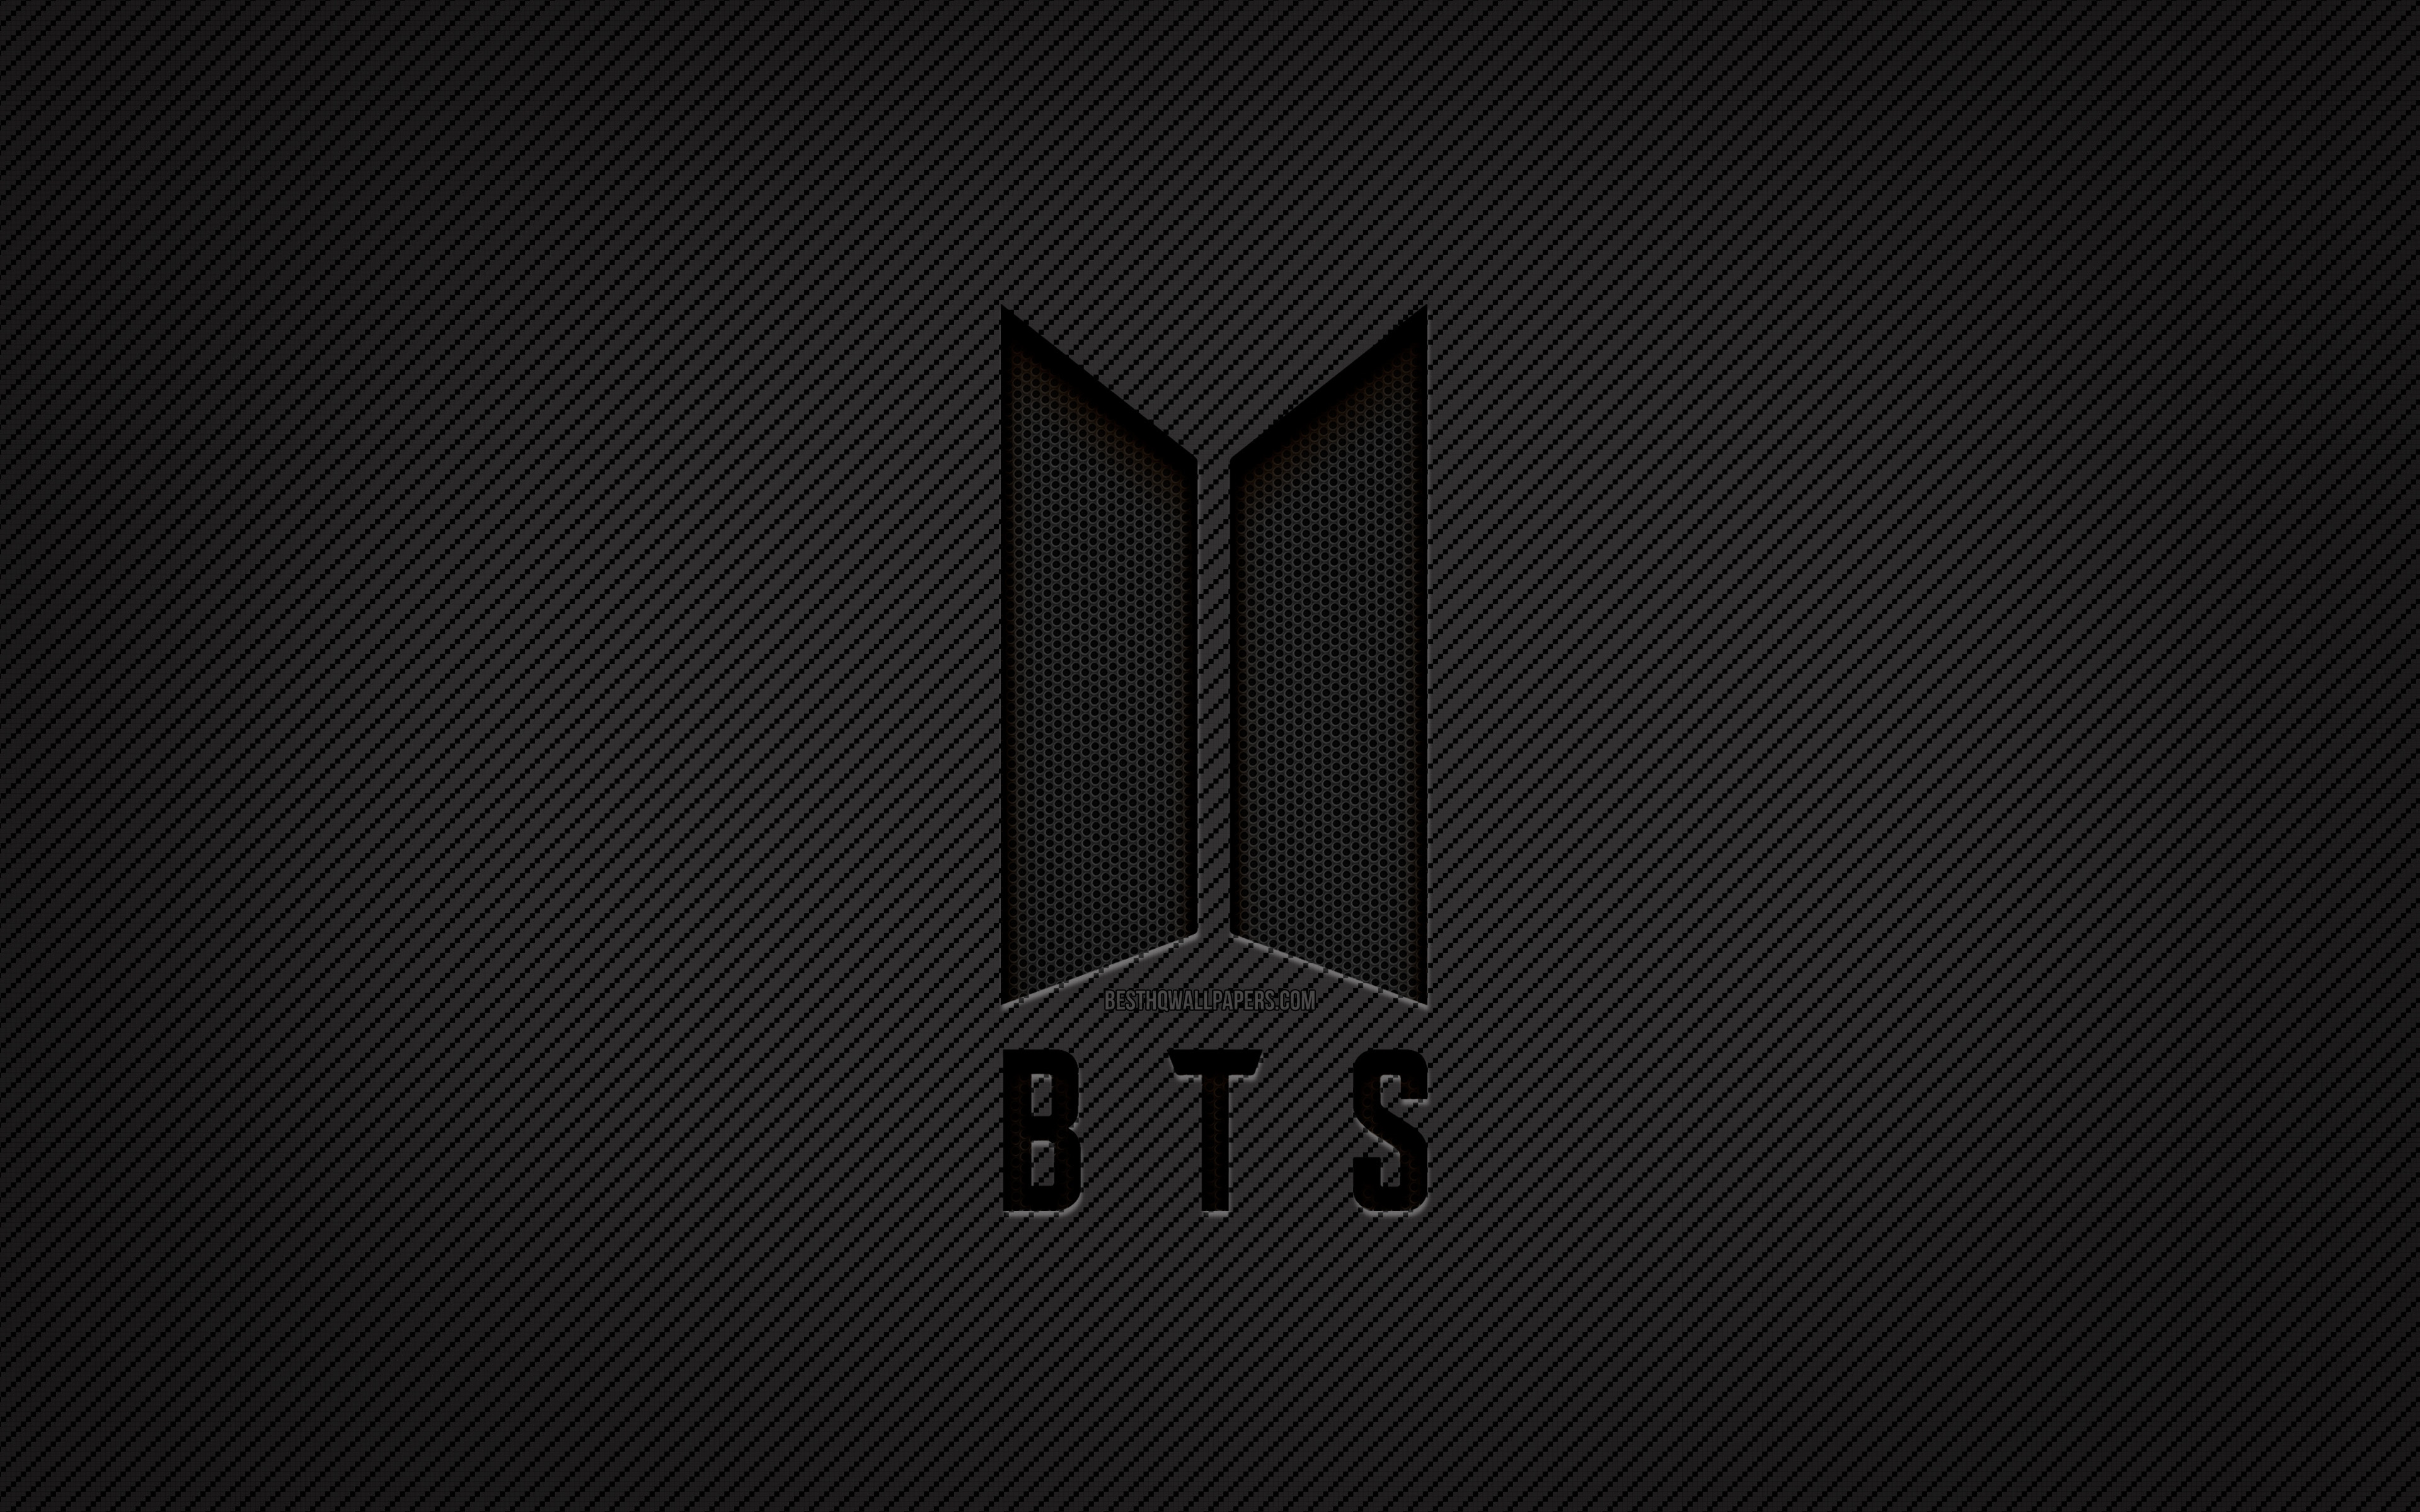 Download wallpaper BTS carbon logo, 4k, grunge art, carbon background, Bangtan Boys, creative, BTS black logo, music stars, BTS logo, BTS, Bangtan Boys logo for desktop with resolution 3840x2400. High Quality HD